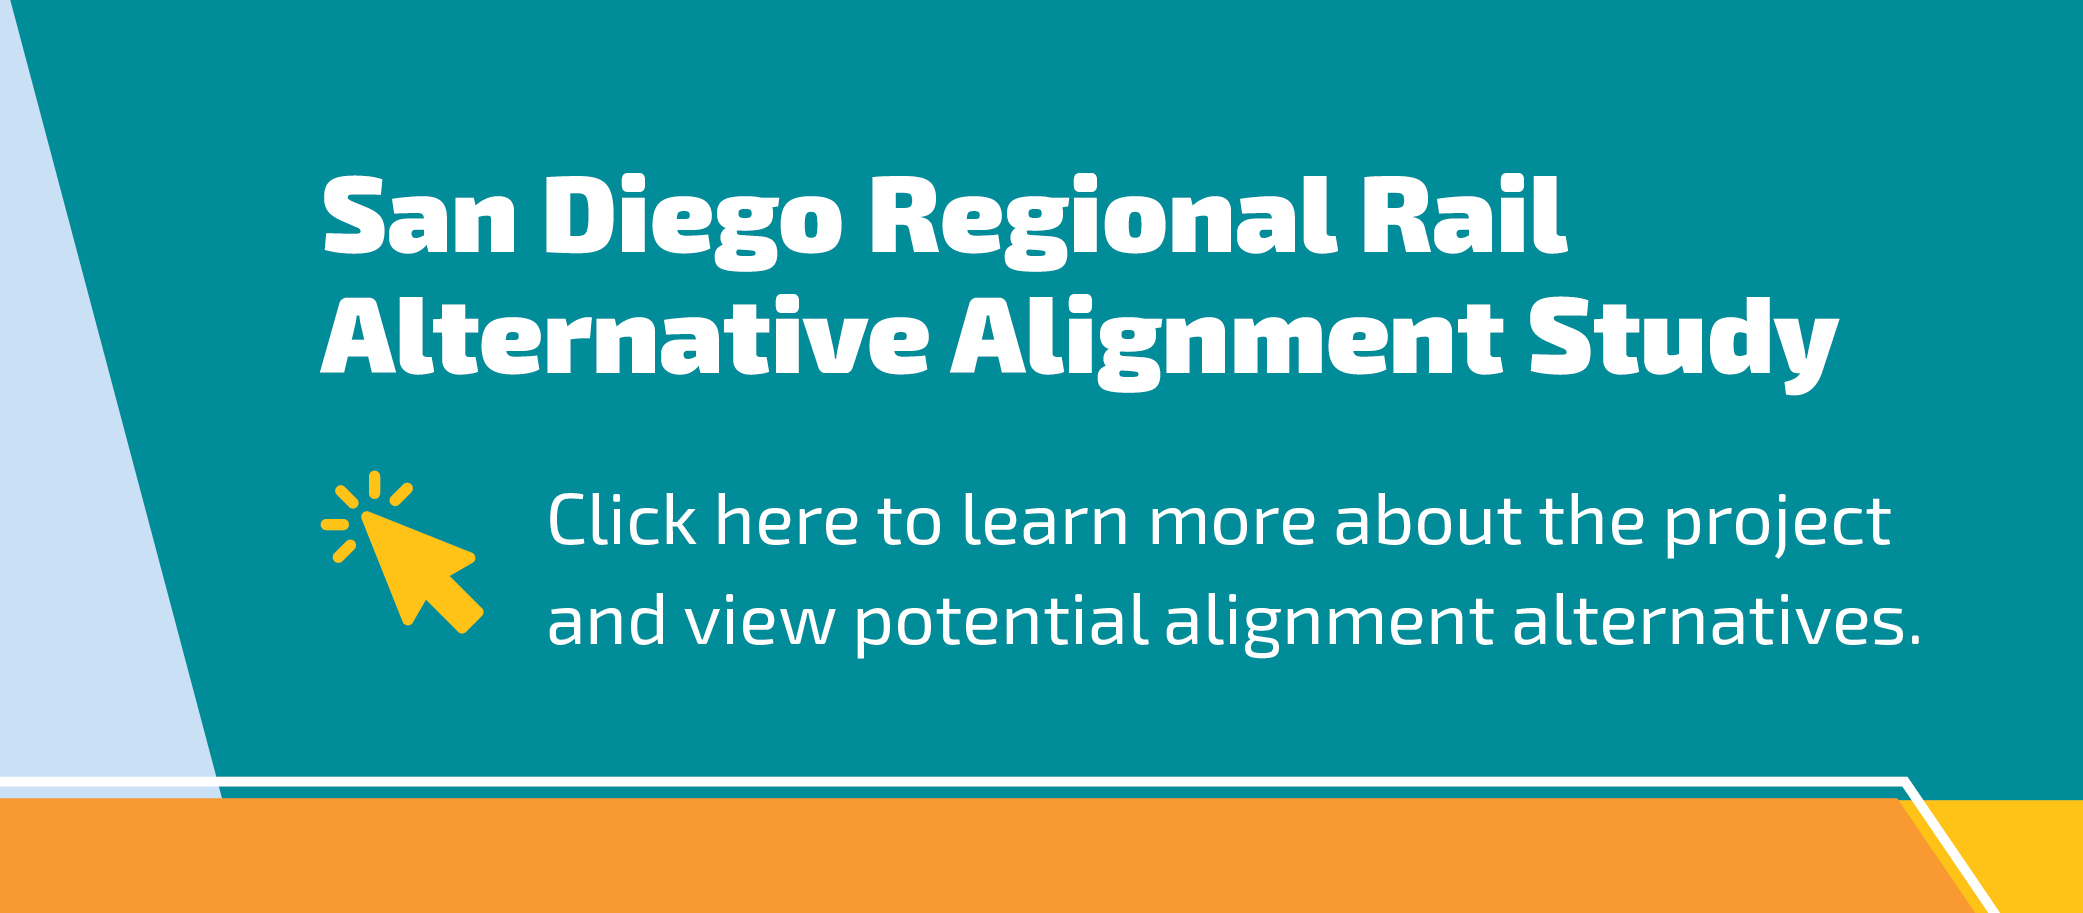 San Diego Regional Rail Alternative Alignment Study Graphic